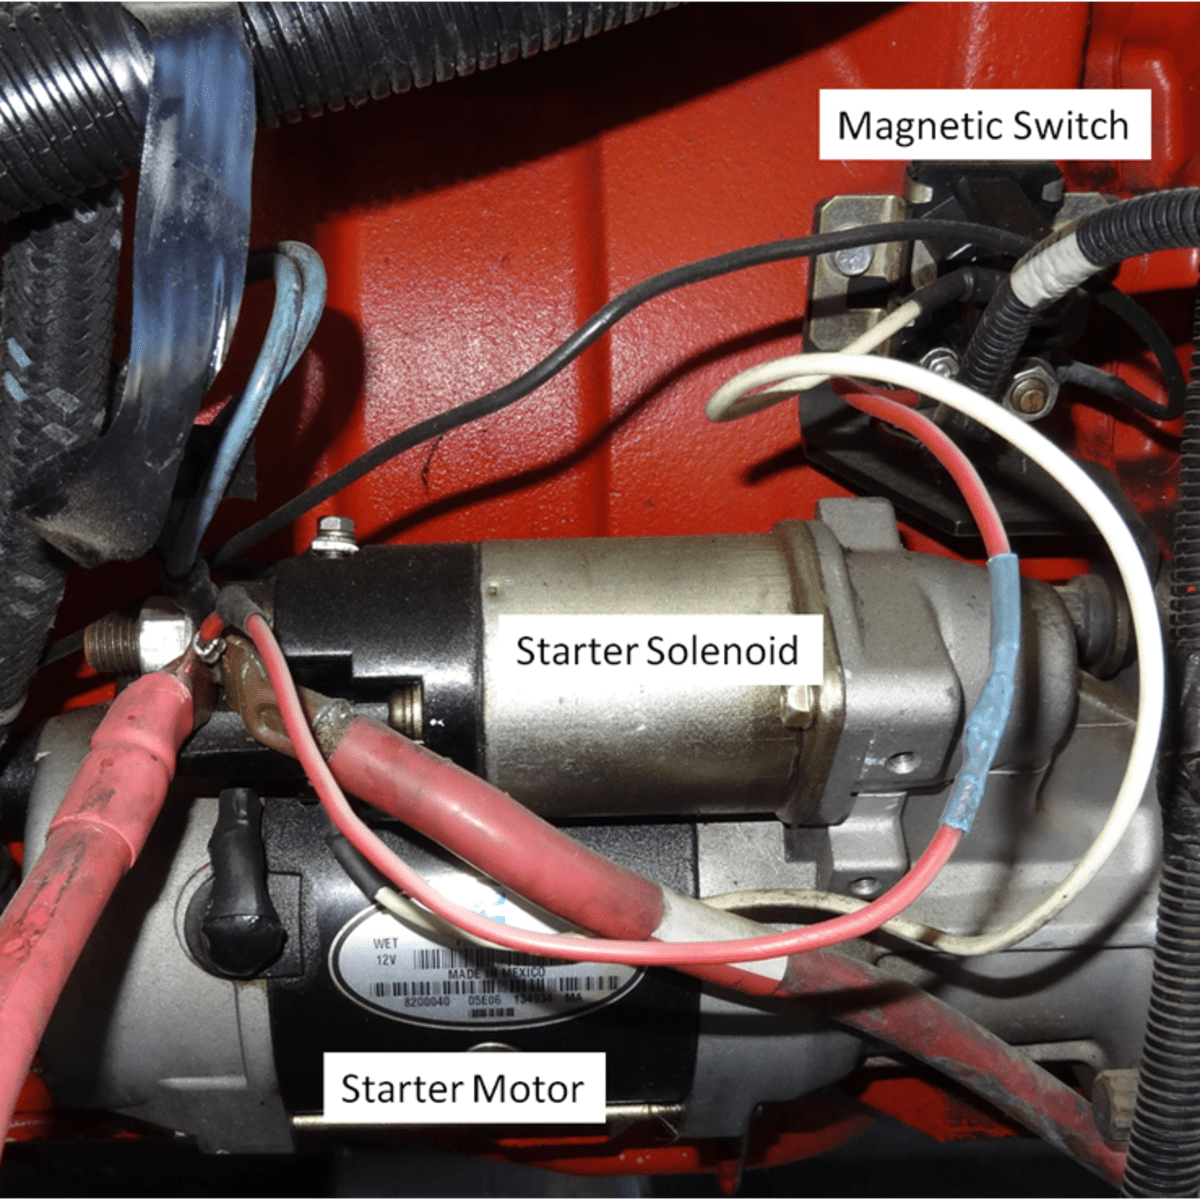 Matig Destructief Oprecht DIY Auto Service: Starter Diagnosis and Repair - AxleAddict